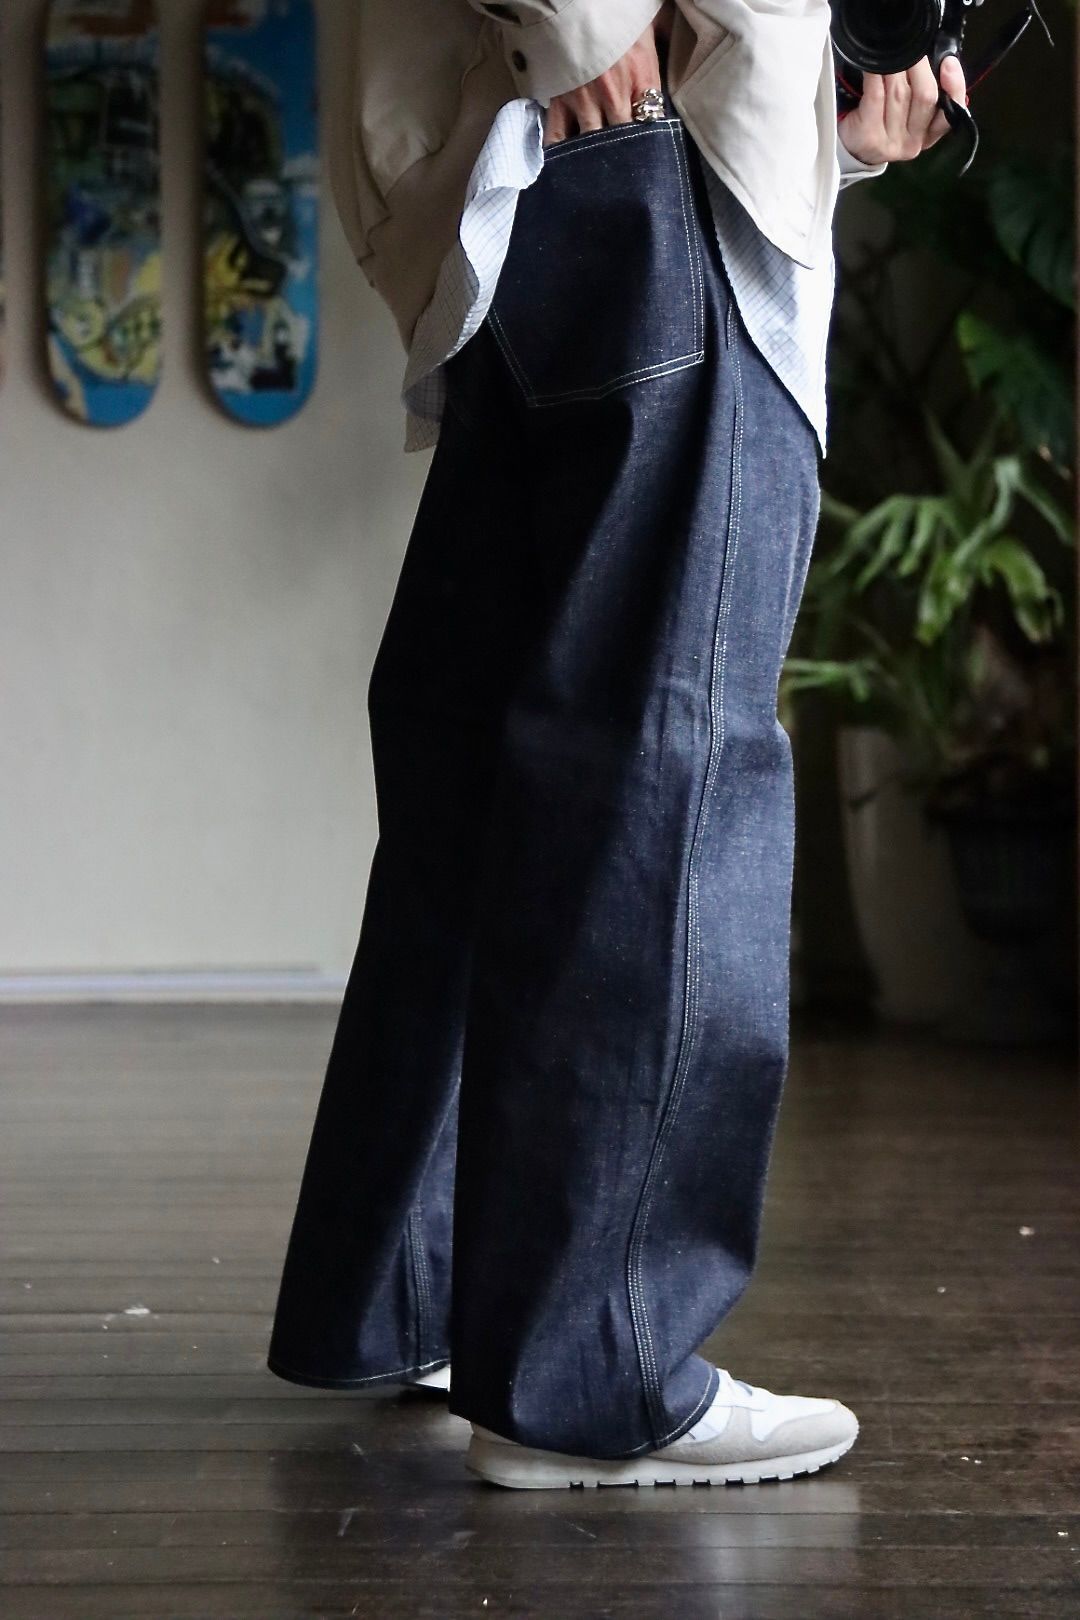 A.PRESSE 23SSデニム Military Denim Trousers(23SAP-04-07H)INDIGO 